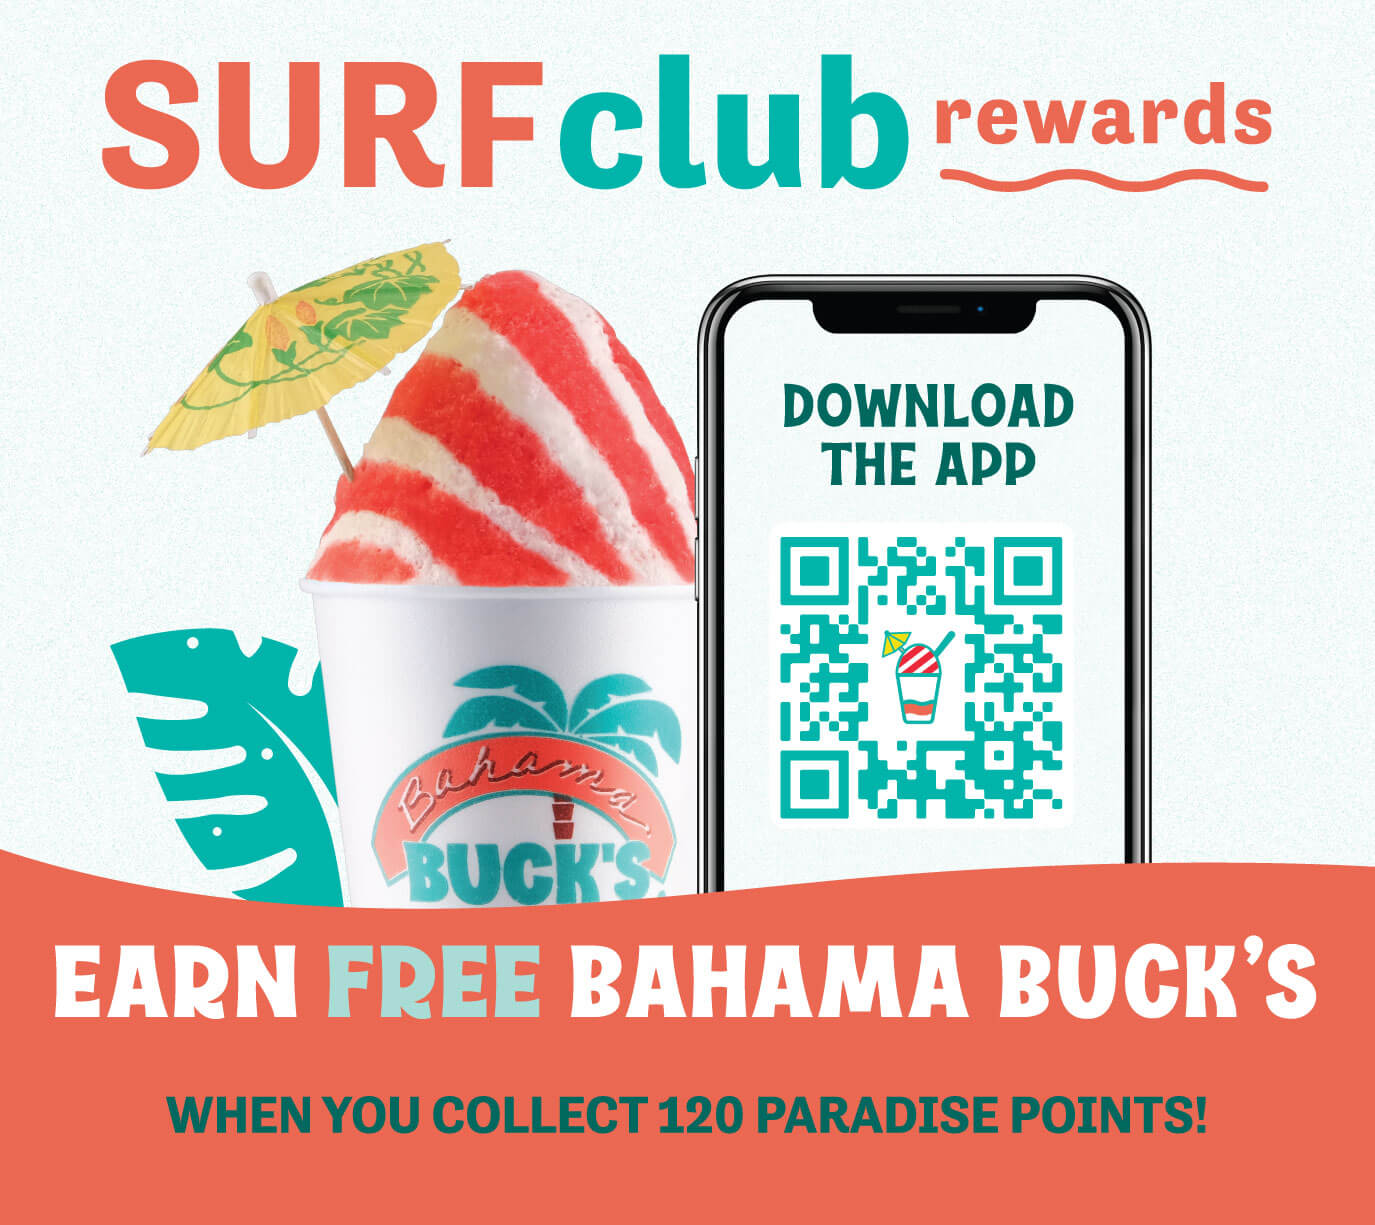 Join Bahama Buck's Loyalty Program